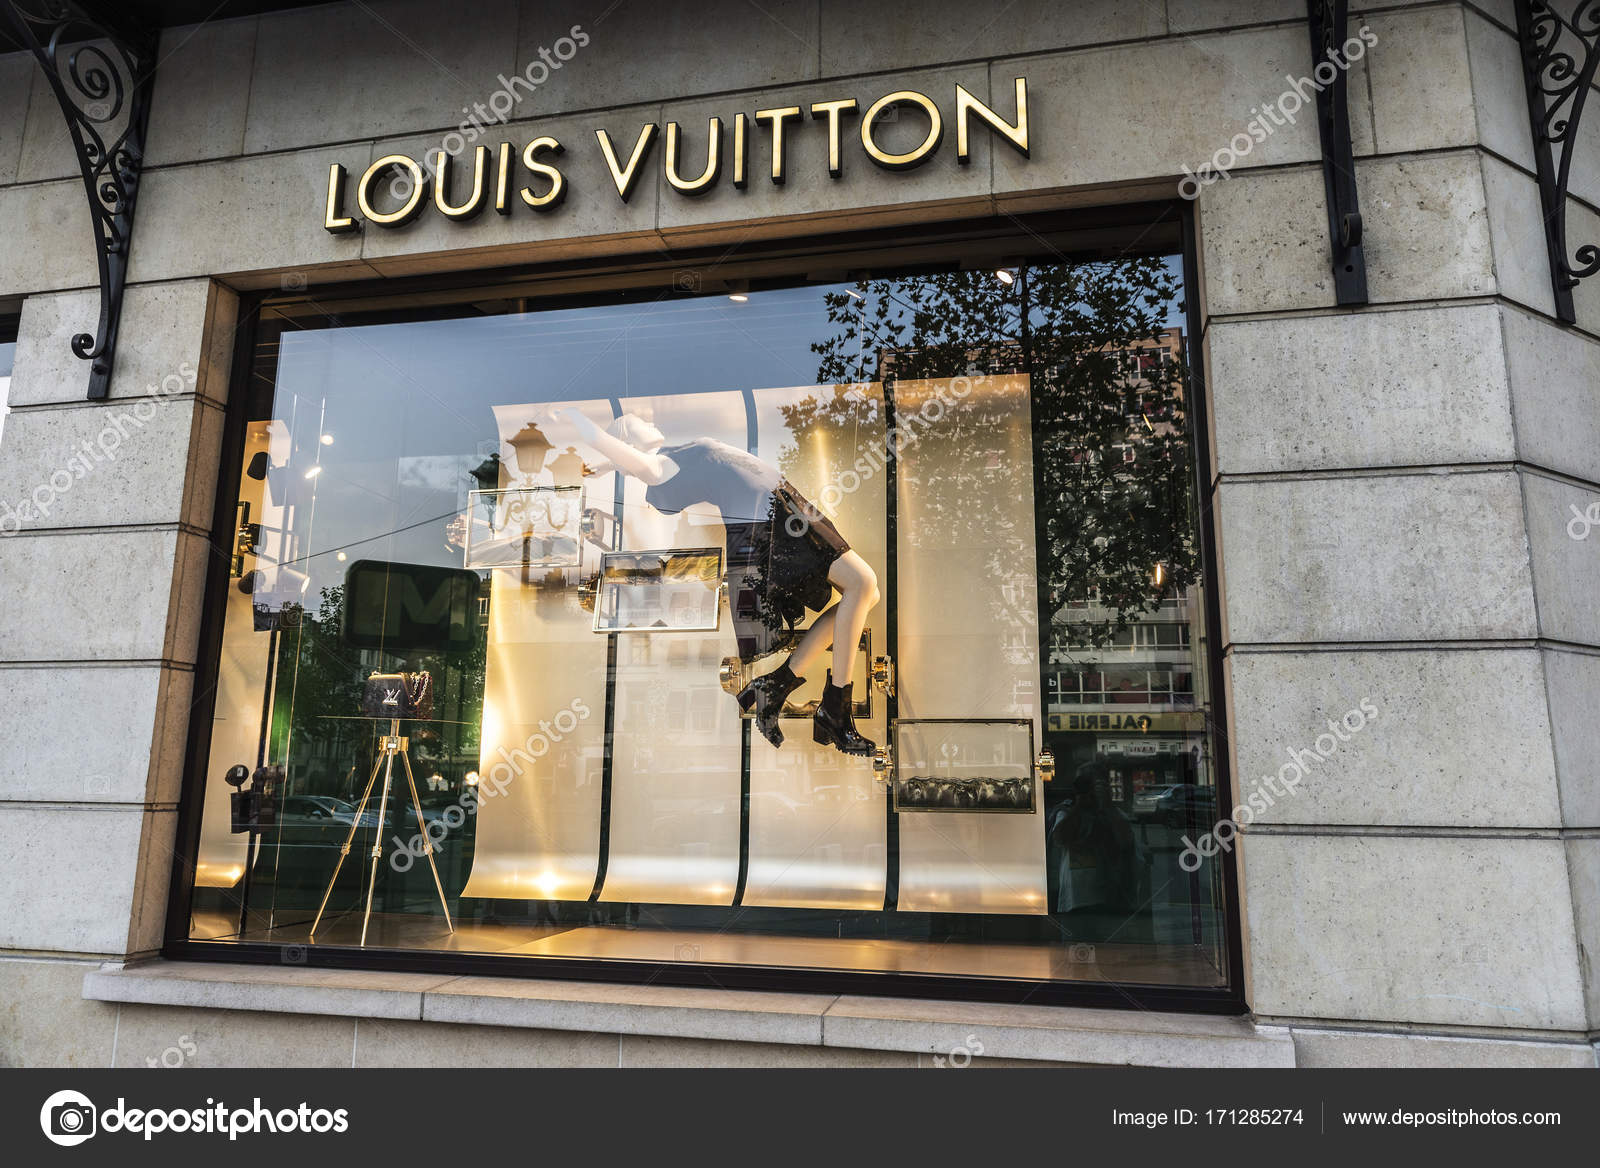 Louis Vuitton winkel in Brussel, België – Redactionele stockfoto © J2R #171285274